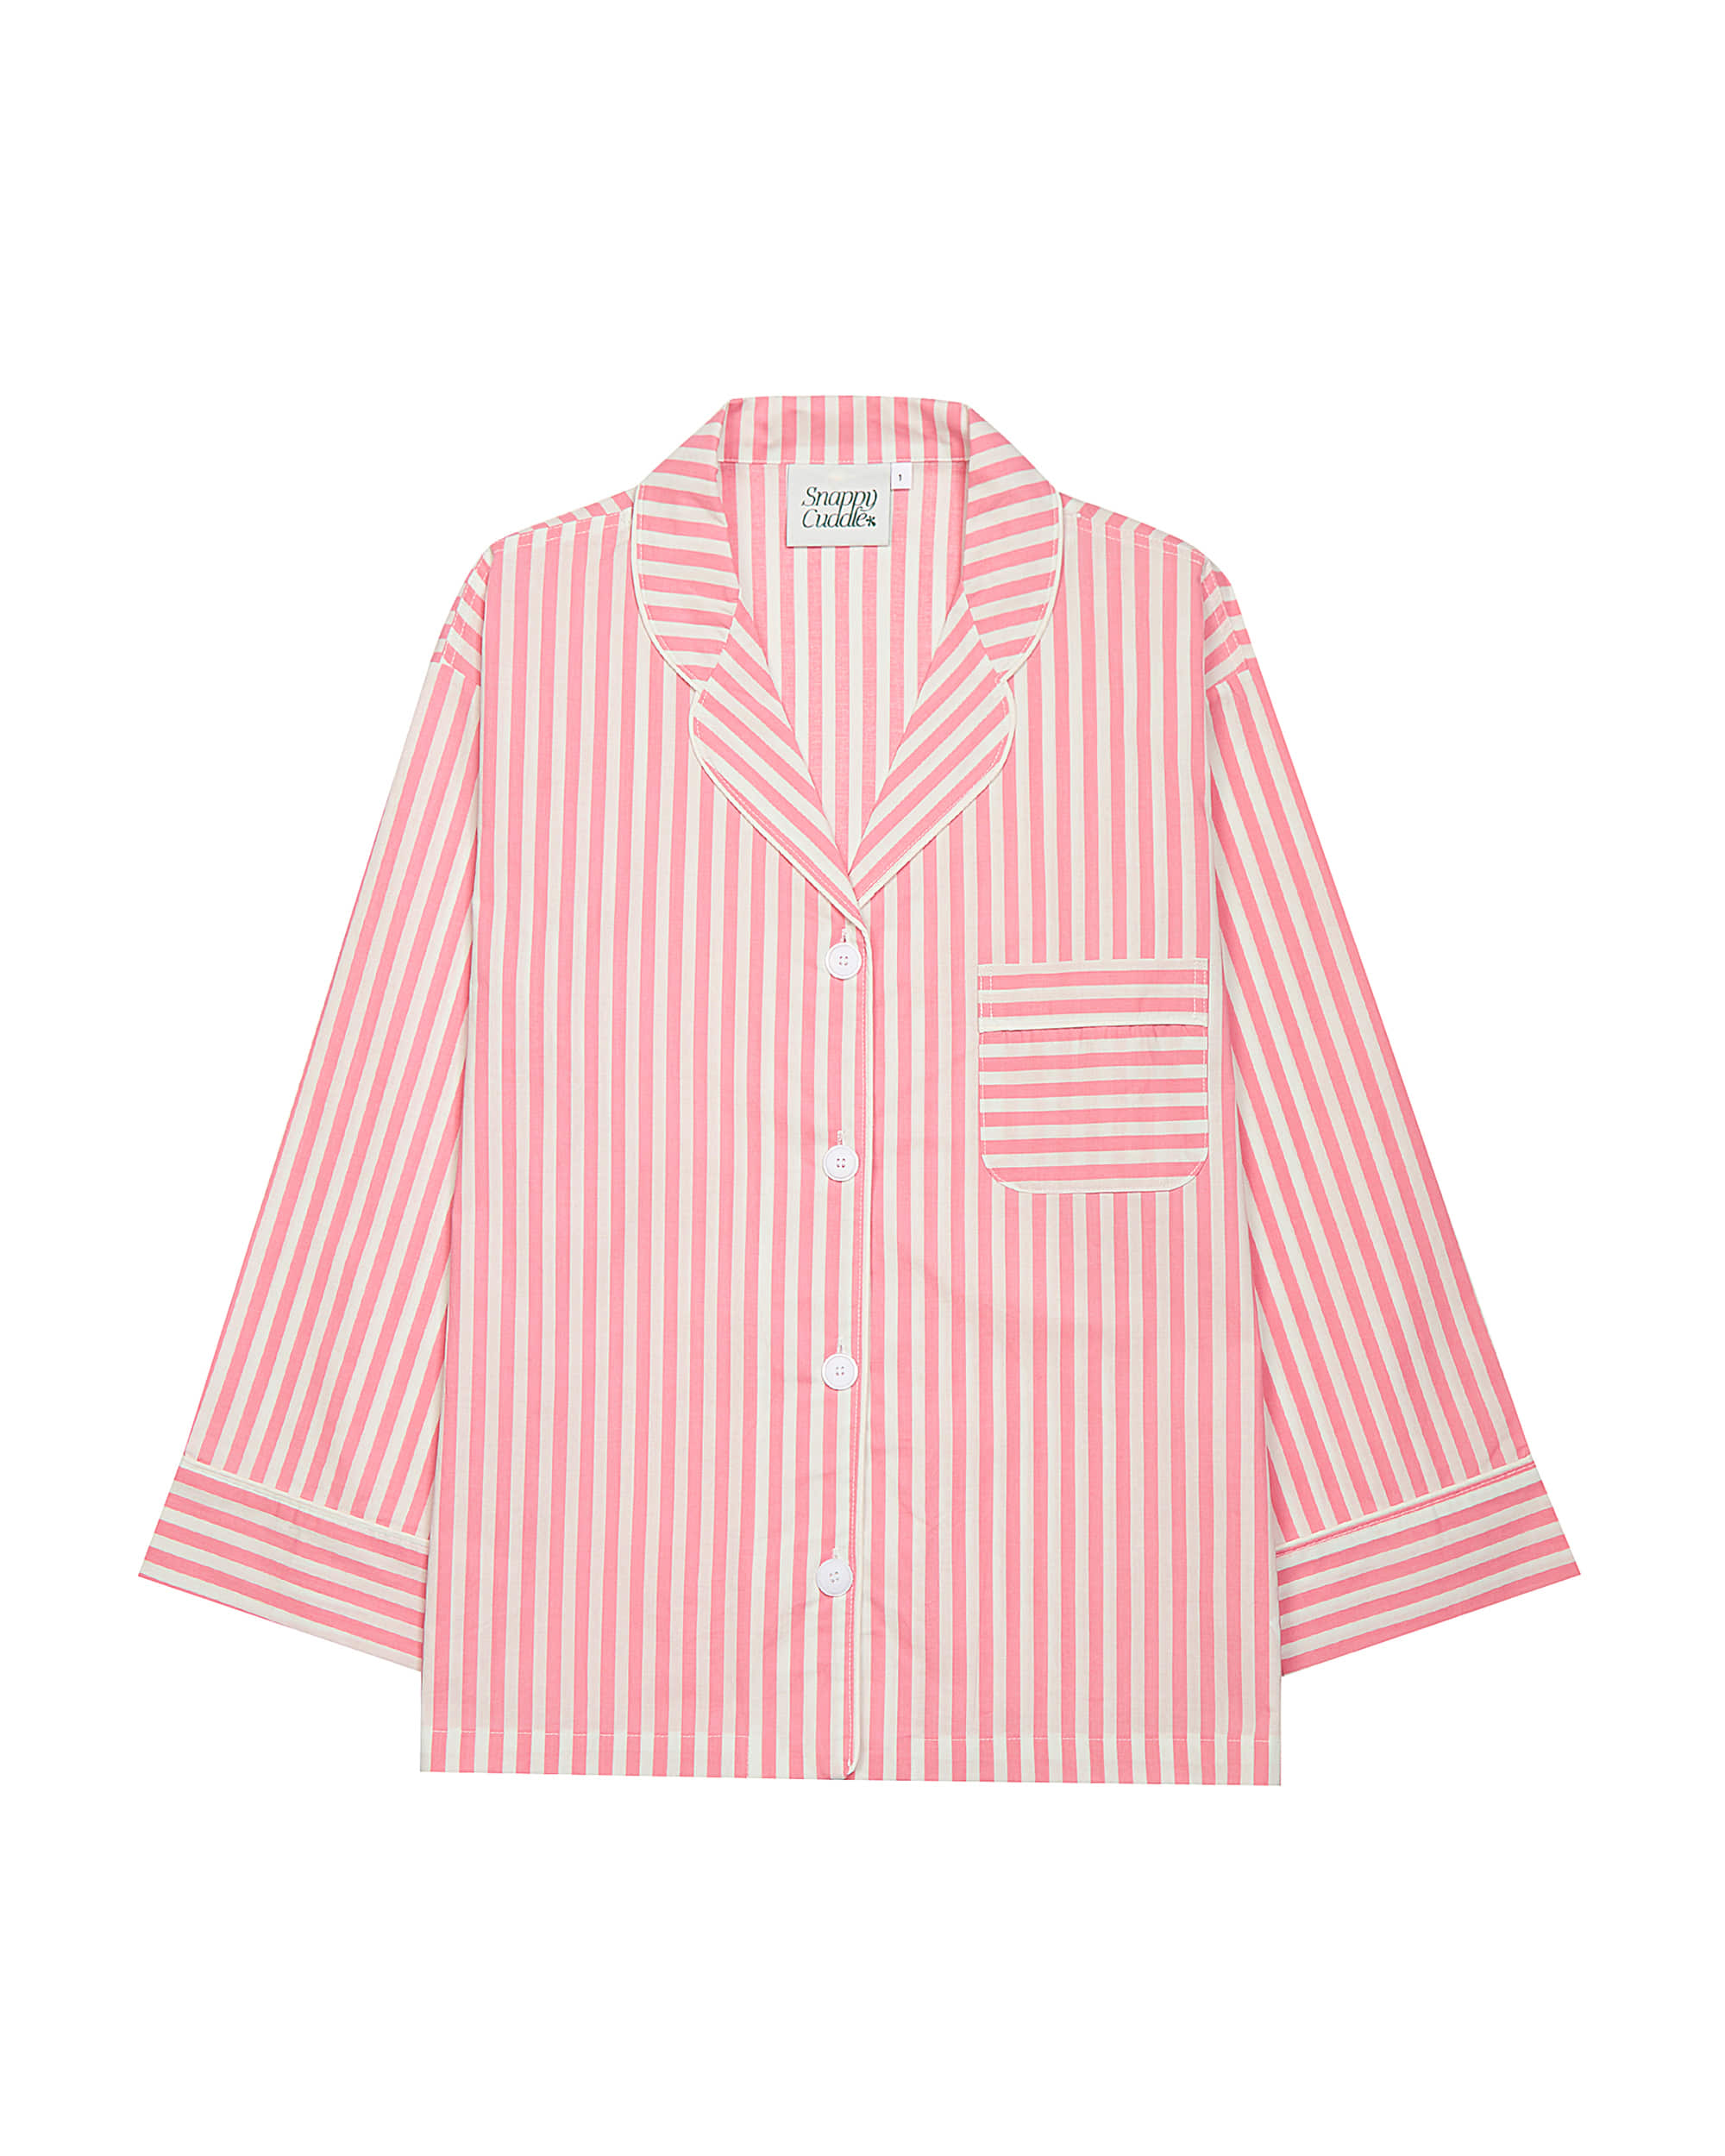 Steady Stripe Pajama Set (Flamingo Pink)